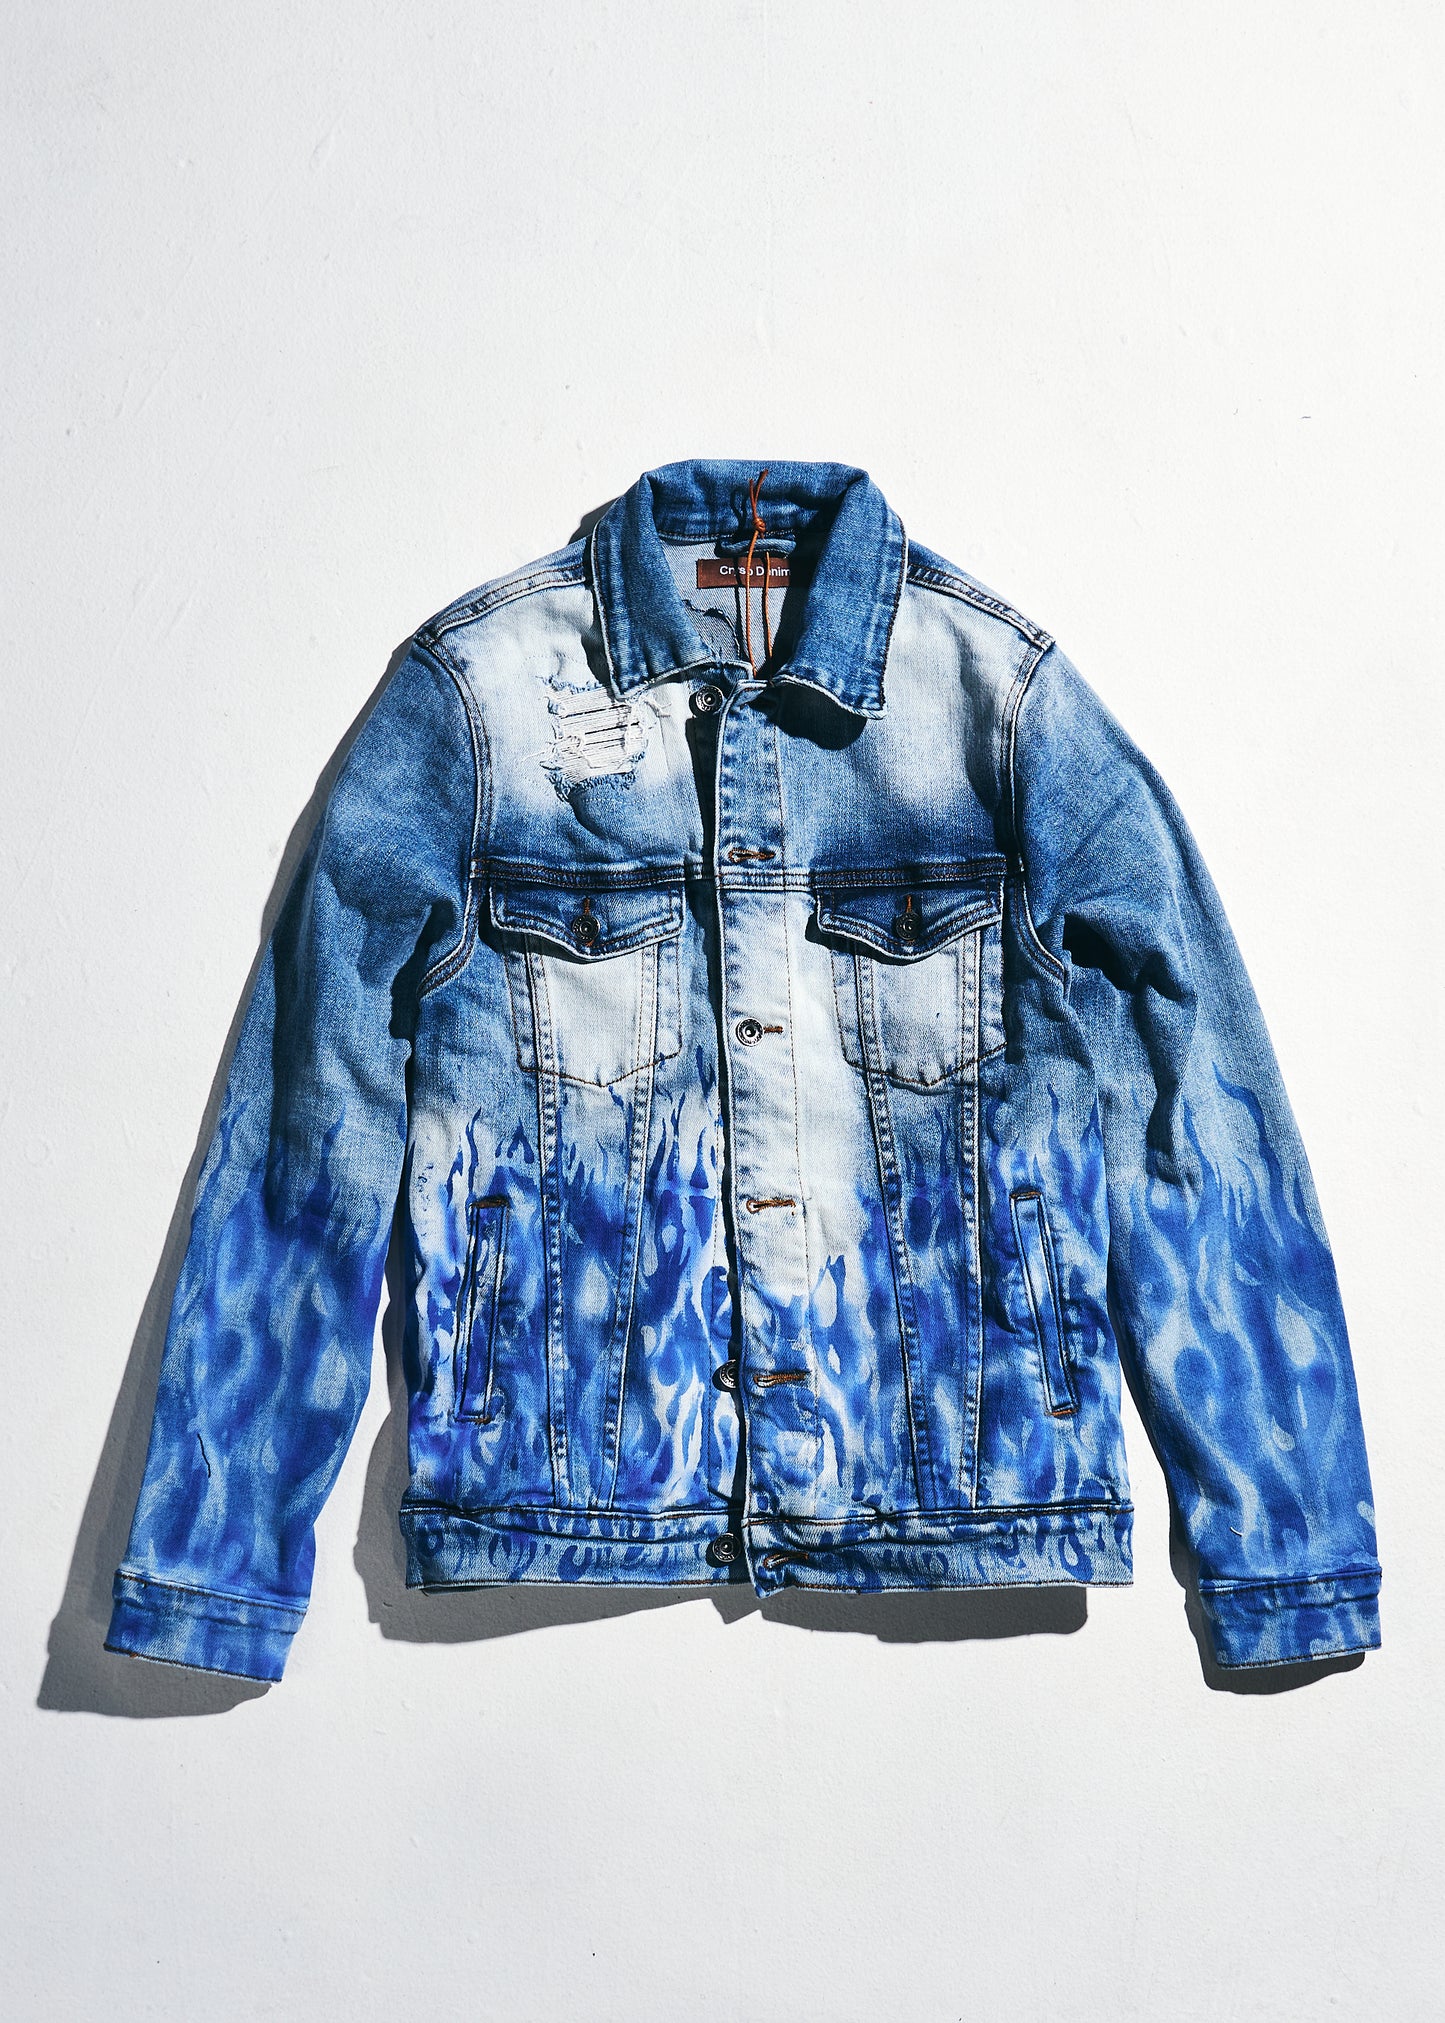 Bering Denim Jacket (Blue Flames)